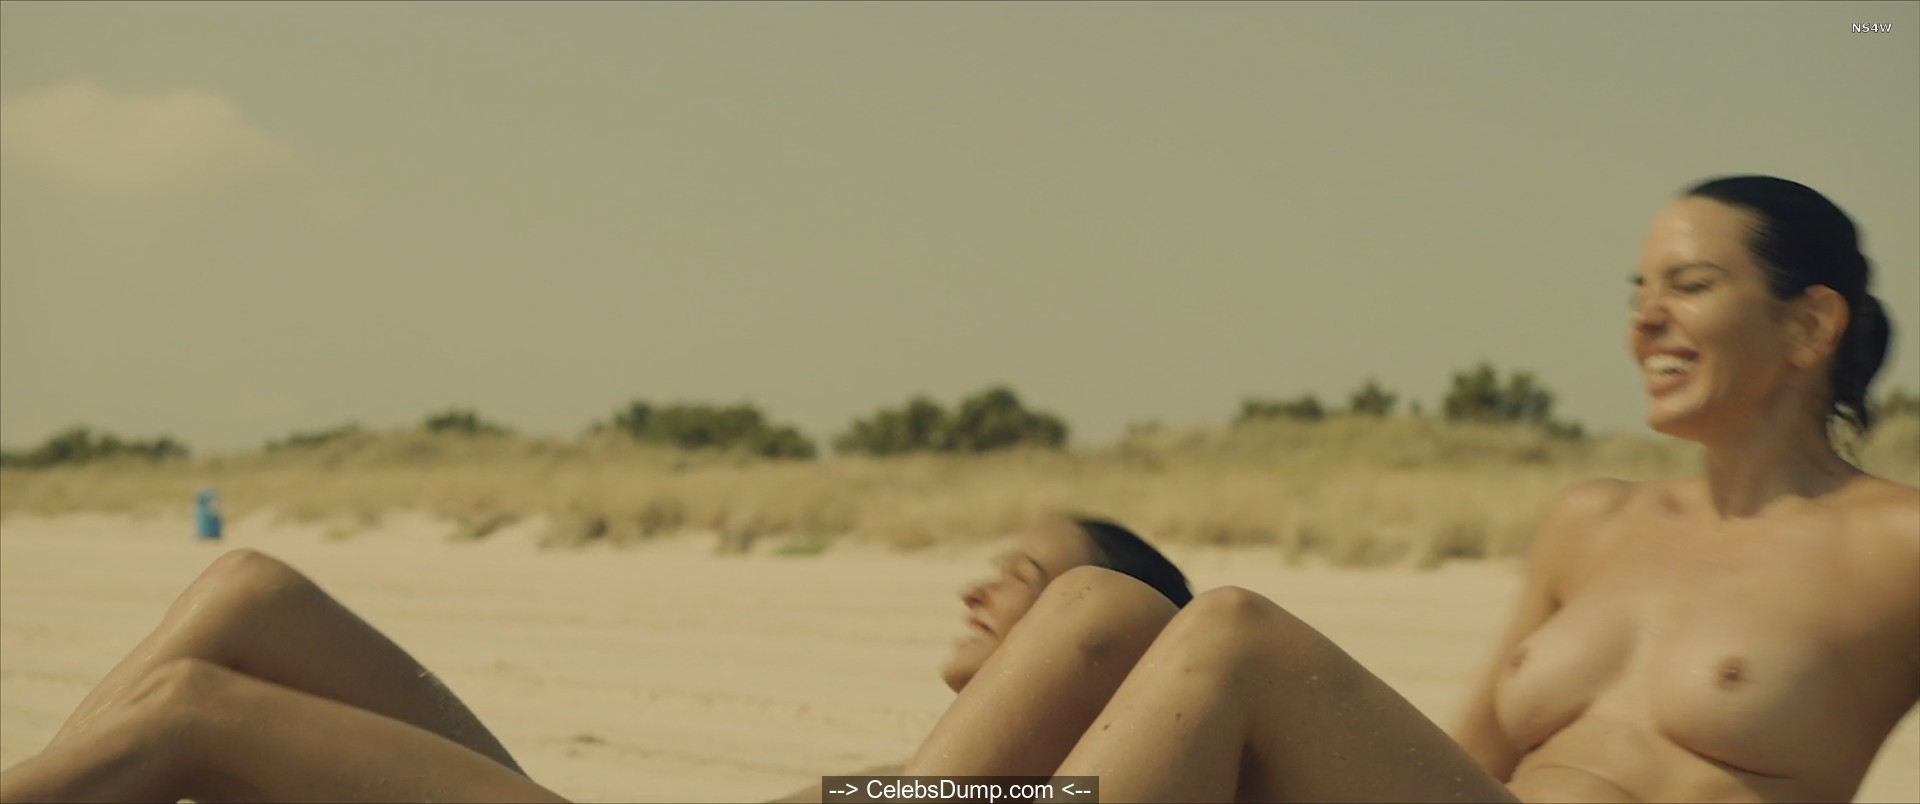 Veronica Sanchez and Marta Milans topless on a beach in El embarcadero s01 ...